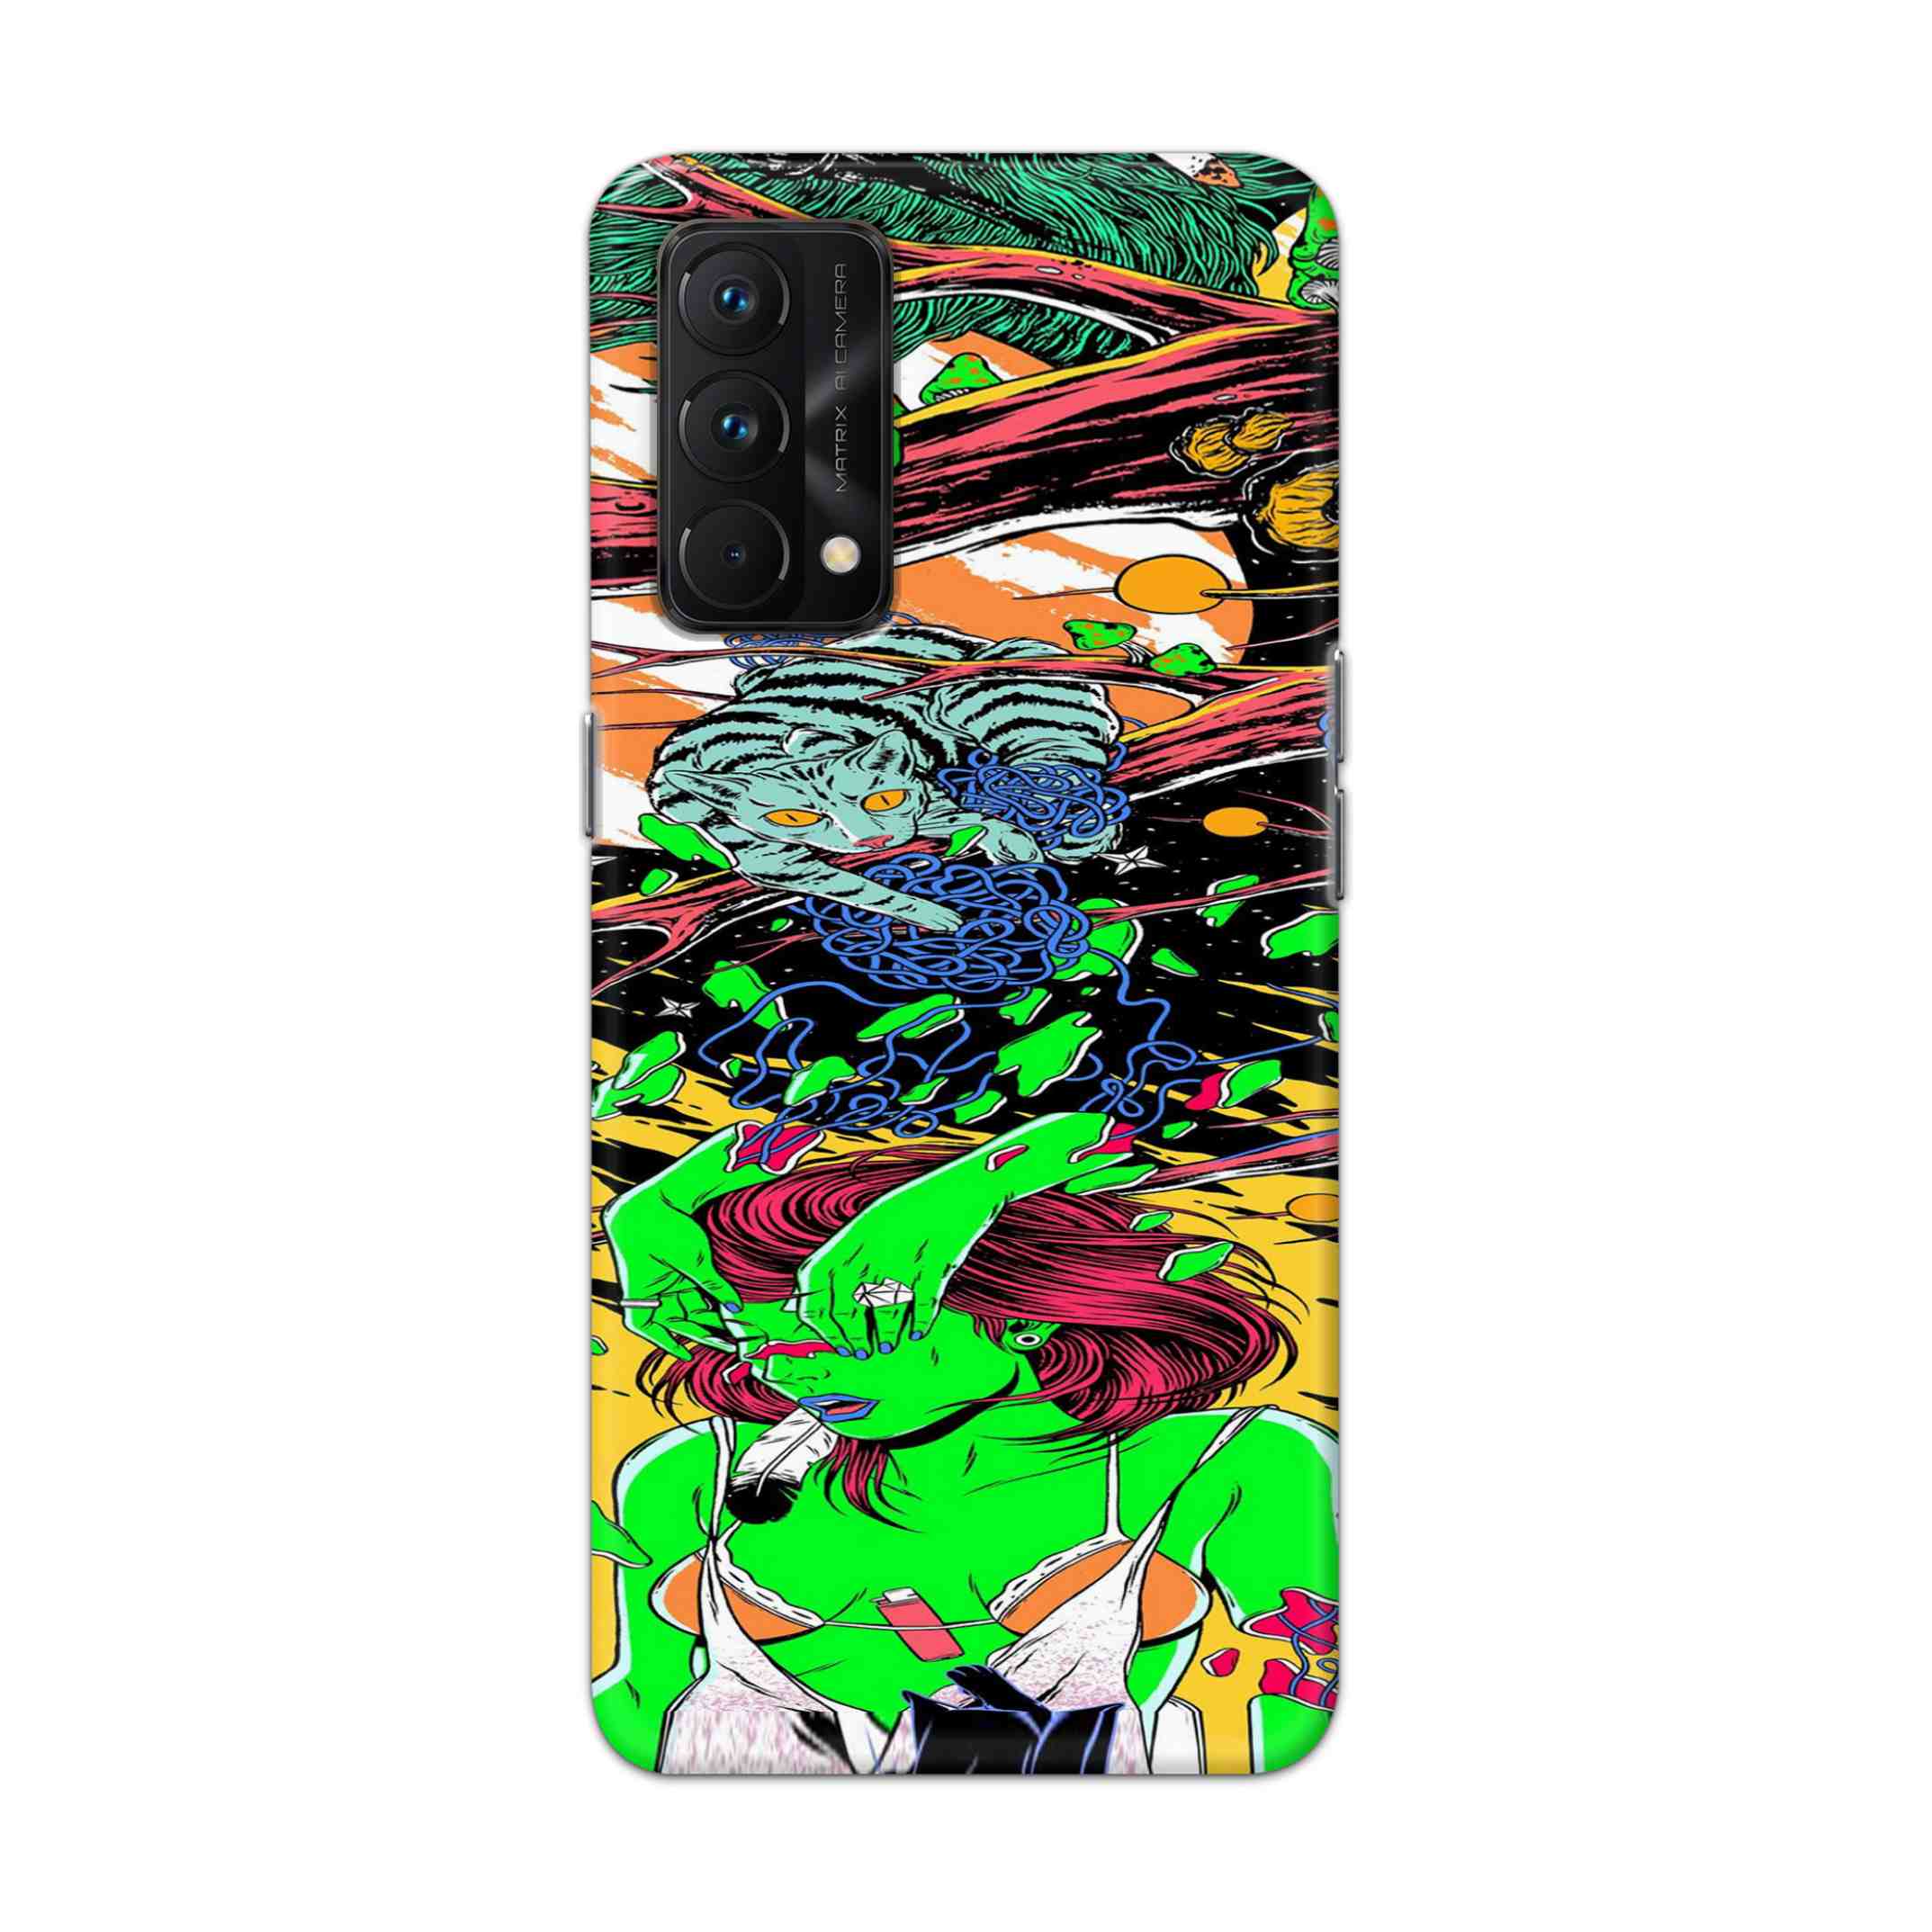 Buy Green Girl Art Hard Back Mobile Phone Case Cover For Realme GT Master Online